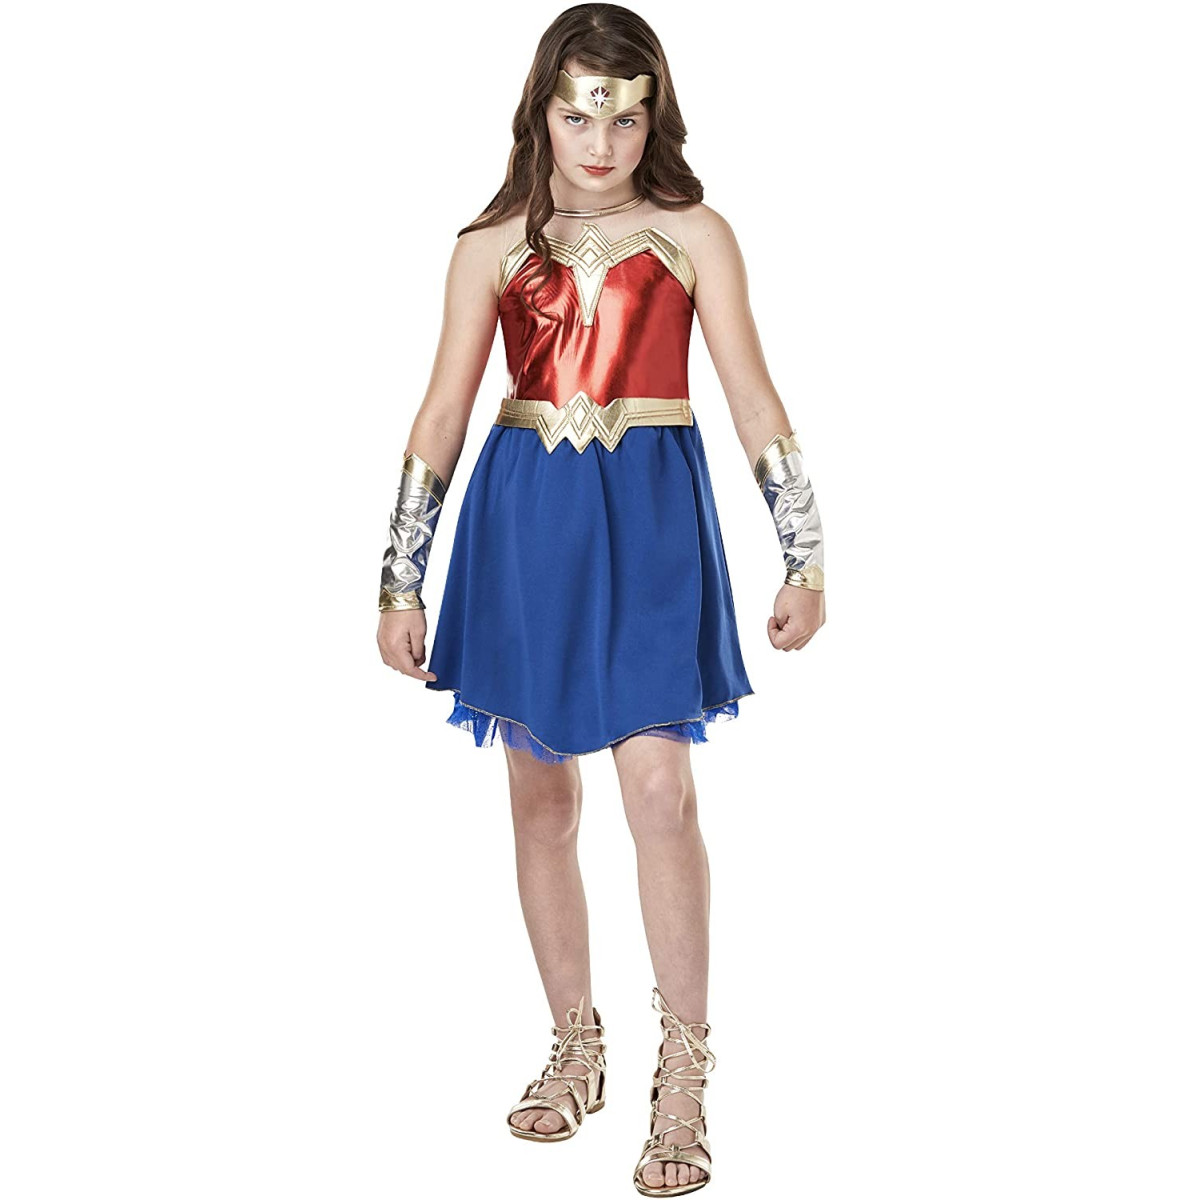 Costume Cosplay Adulto Donna Wonder Woman Rubie's Art.888439-varie taglie 